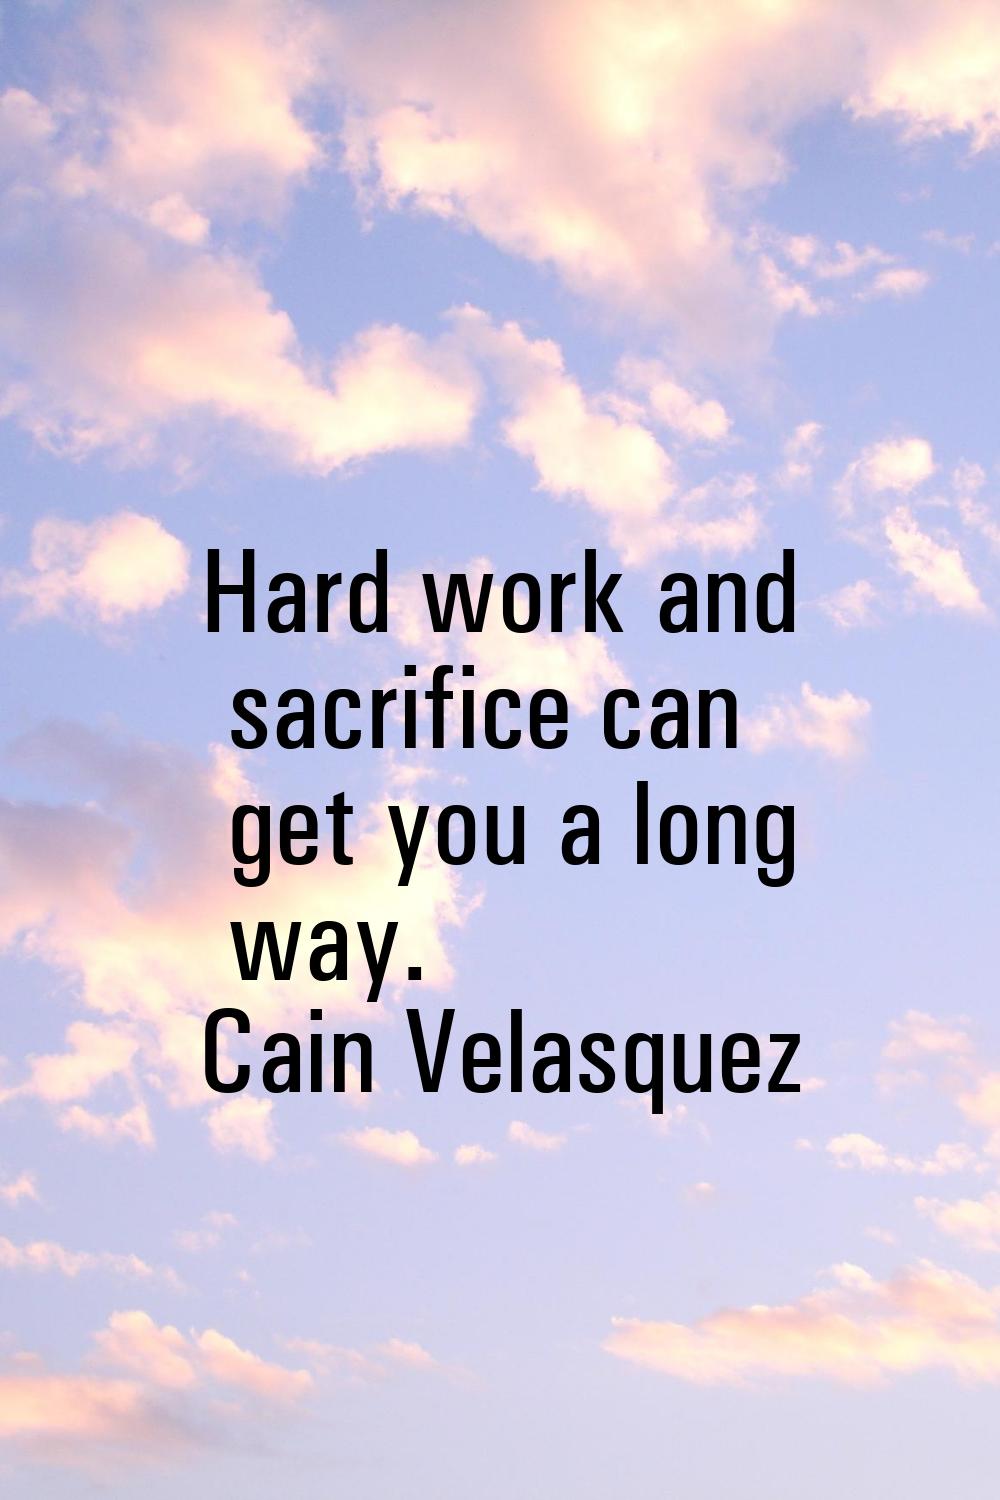 Hard work and sacrifice can get you a long way.